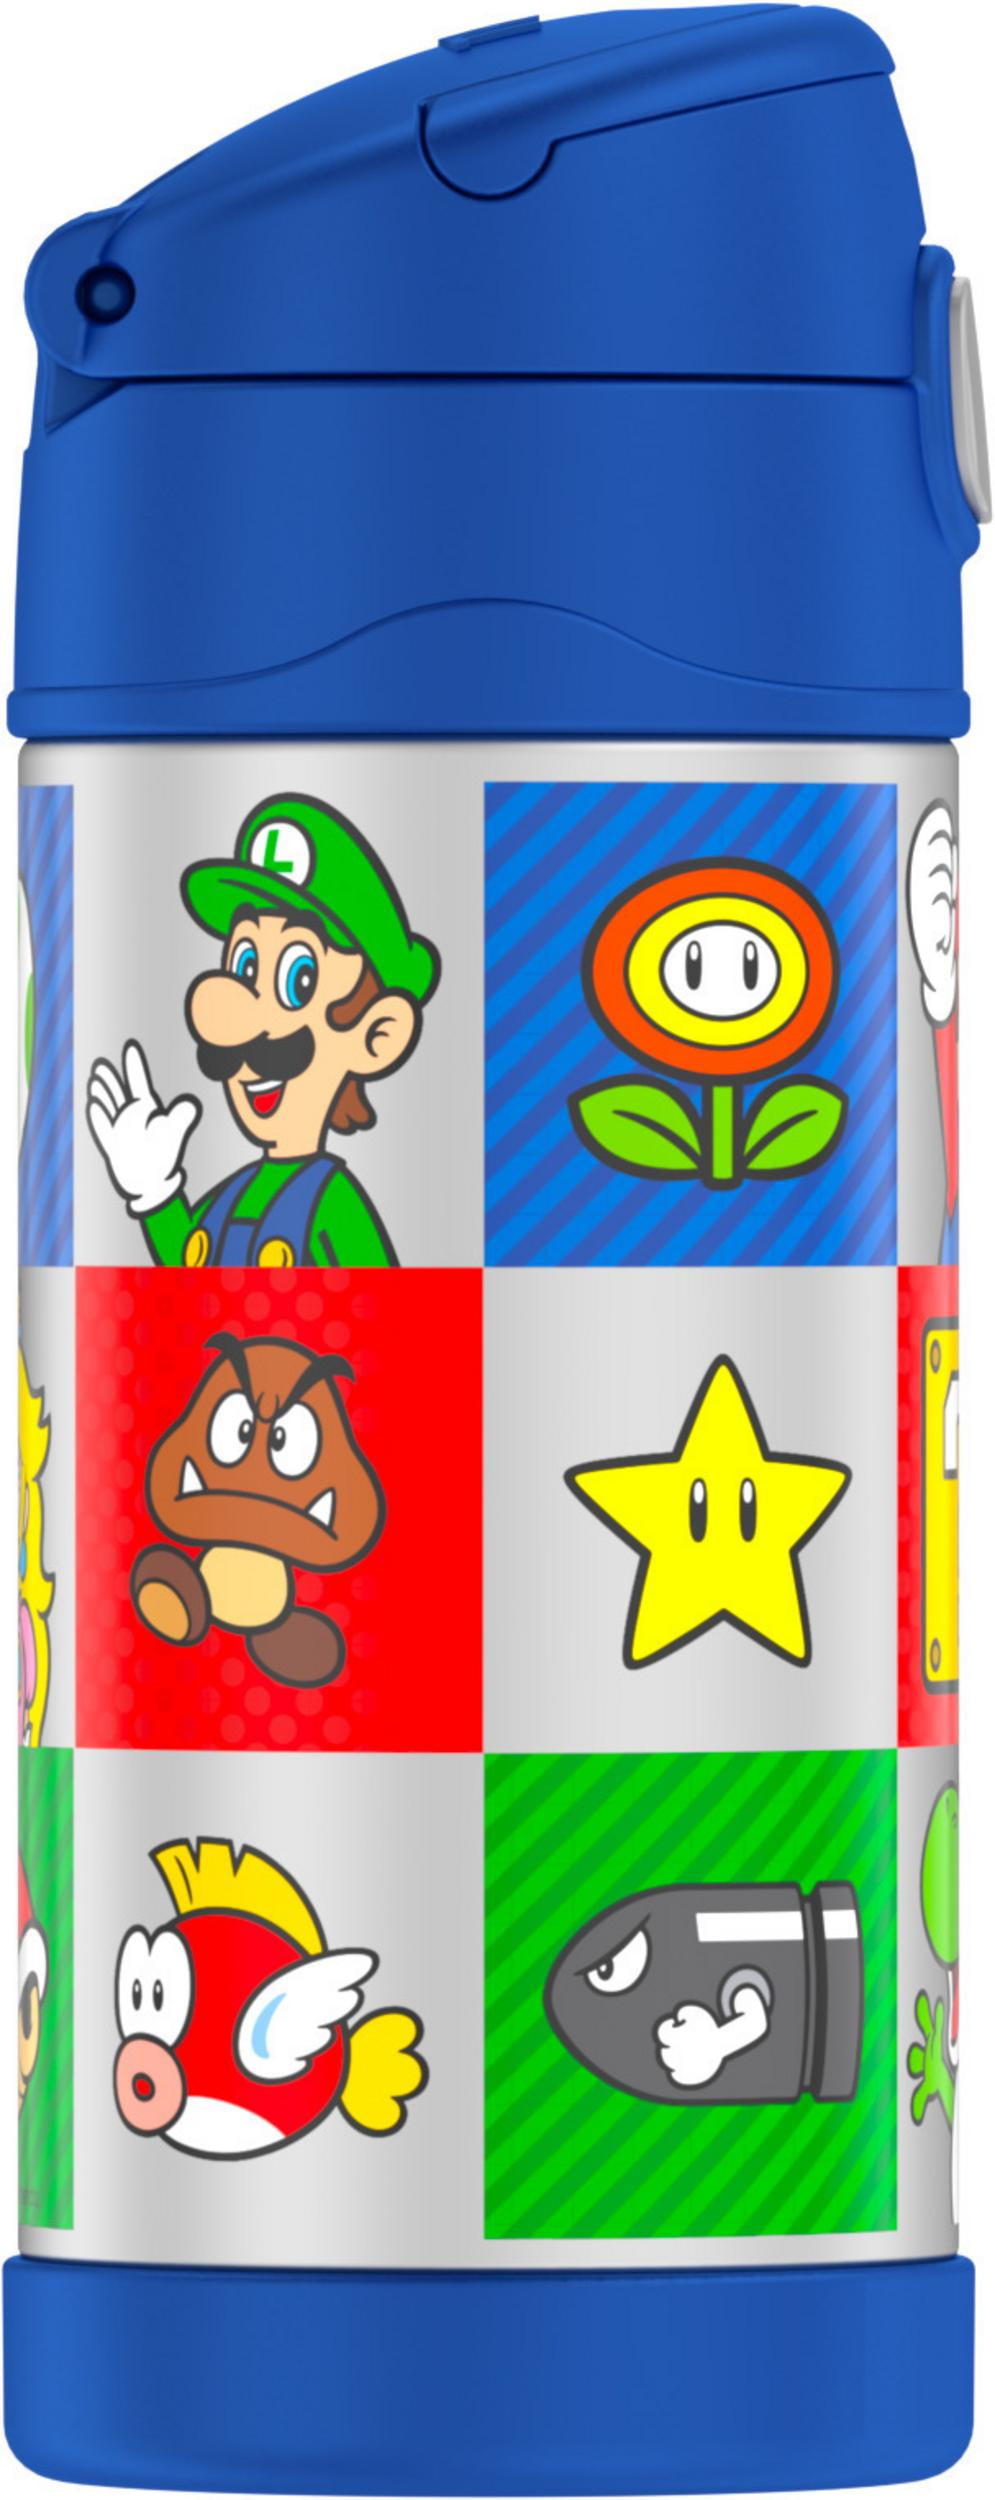 Set Of 6, Super Mario Bros 810946 12 Oz Mario Kart Thermos Water